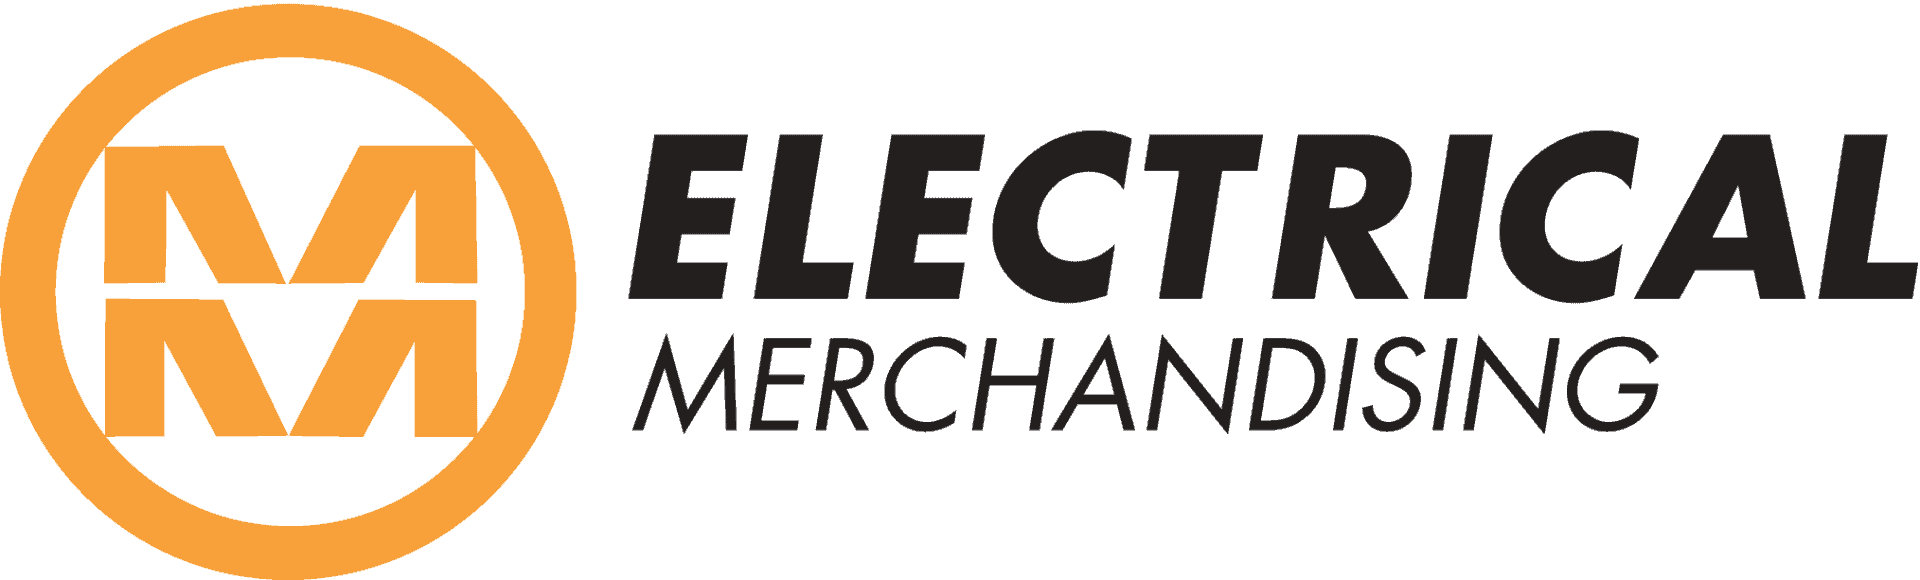 mm_electrical_logo